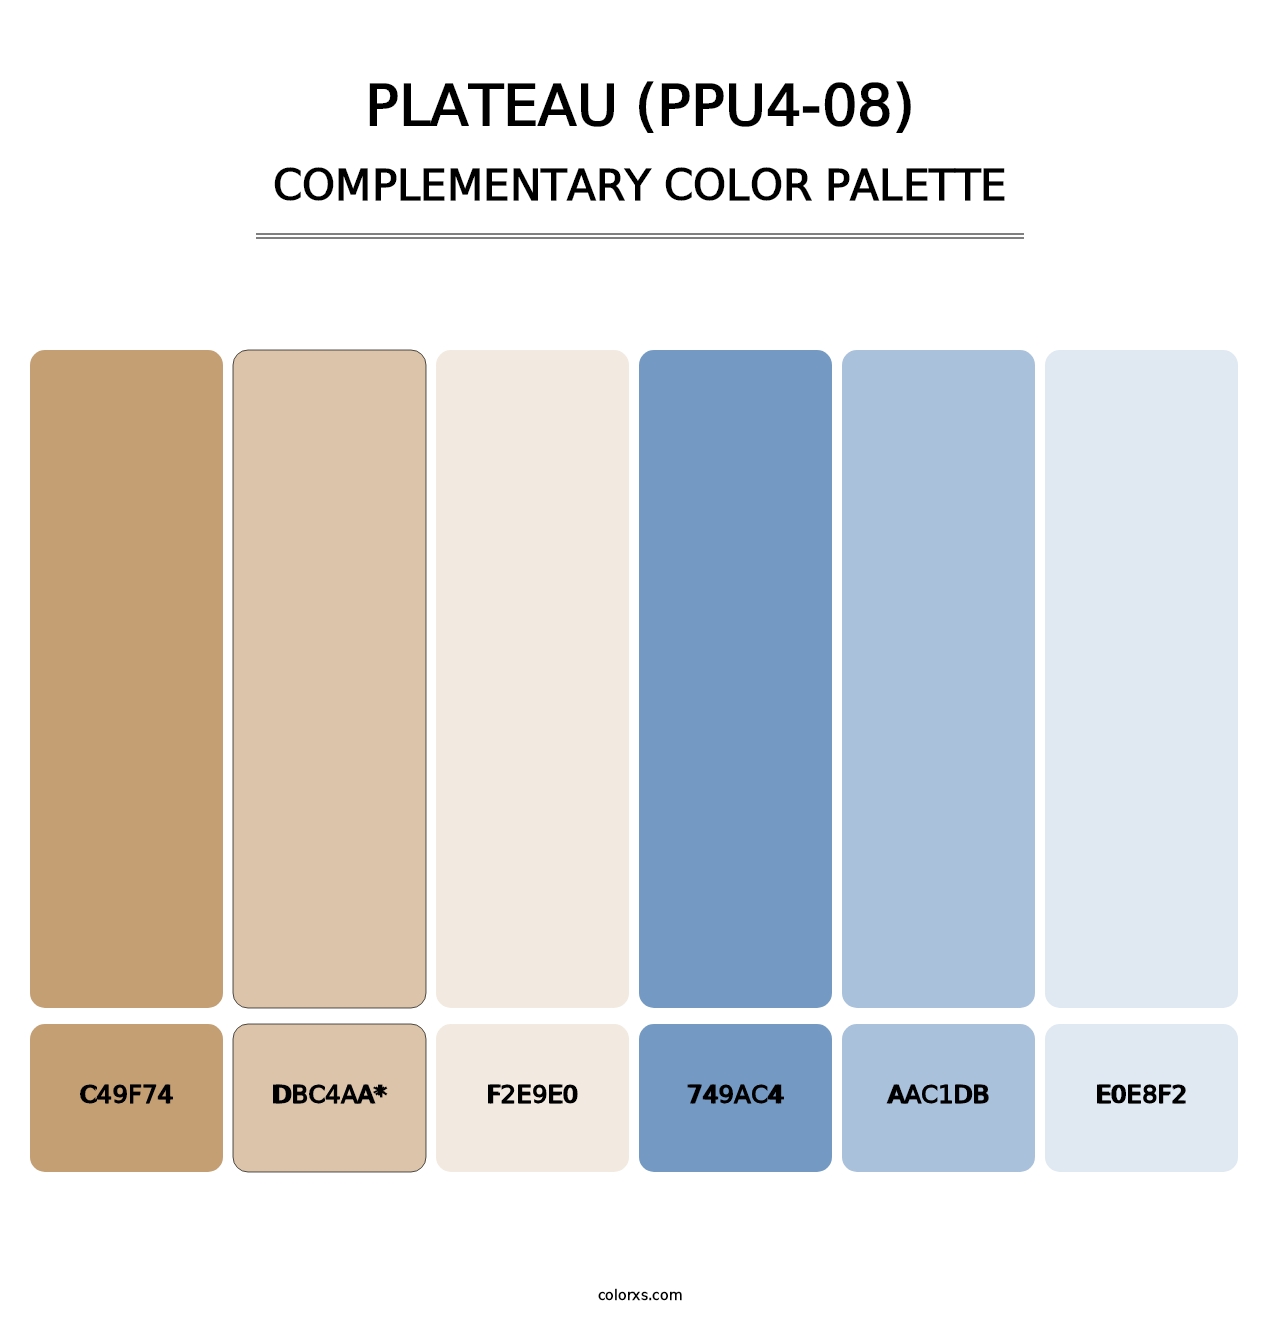 Plateau (PPU4-08) - Complementary Color Palette